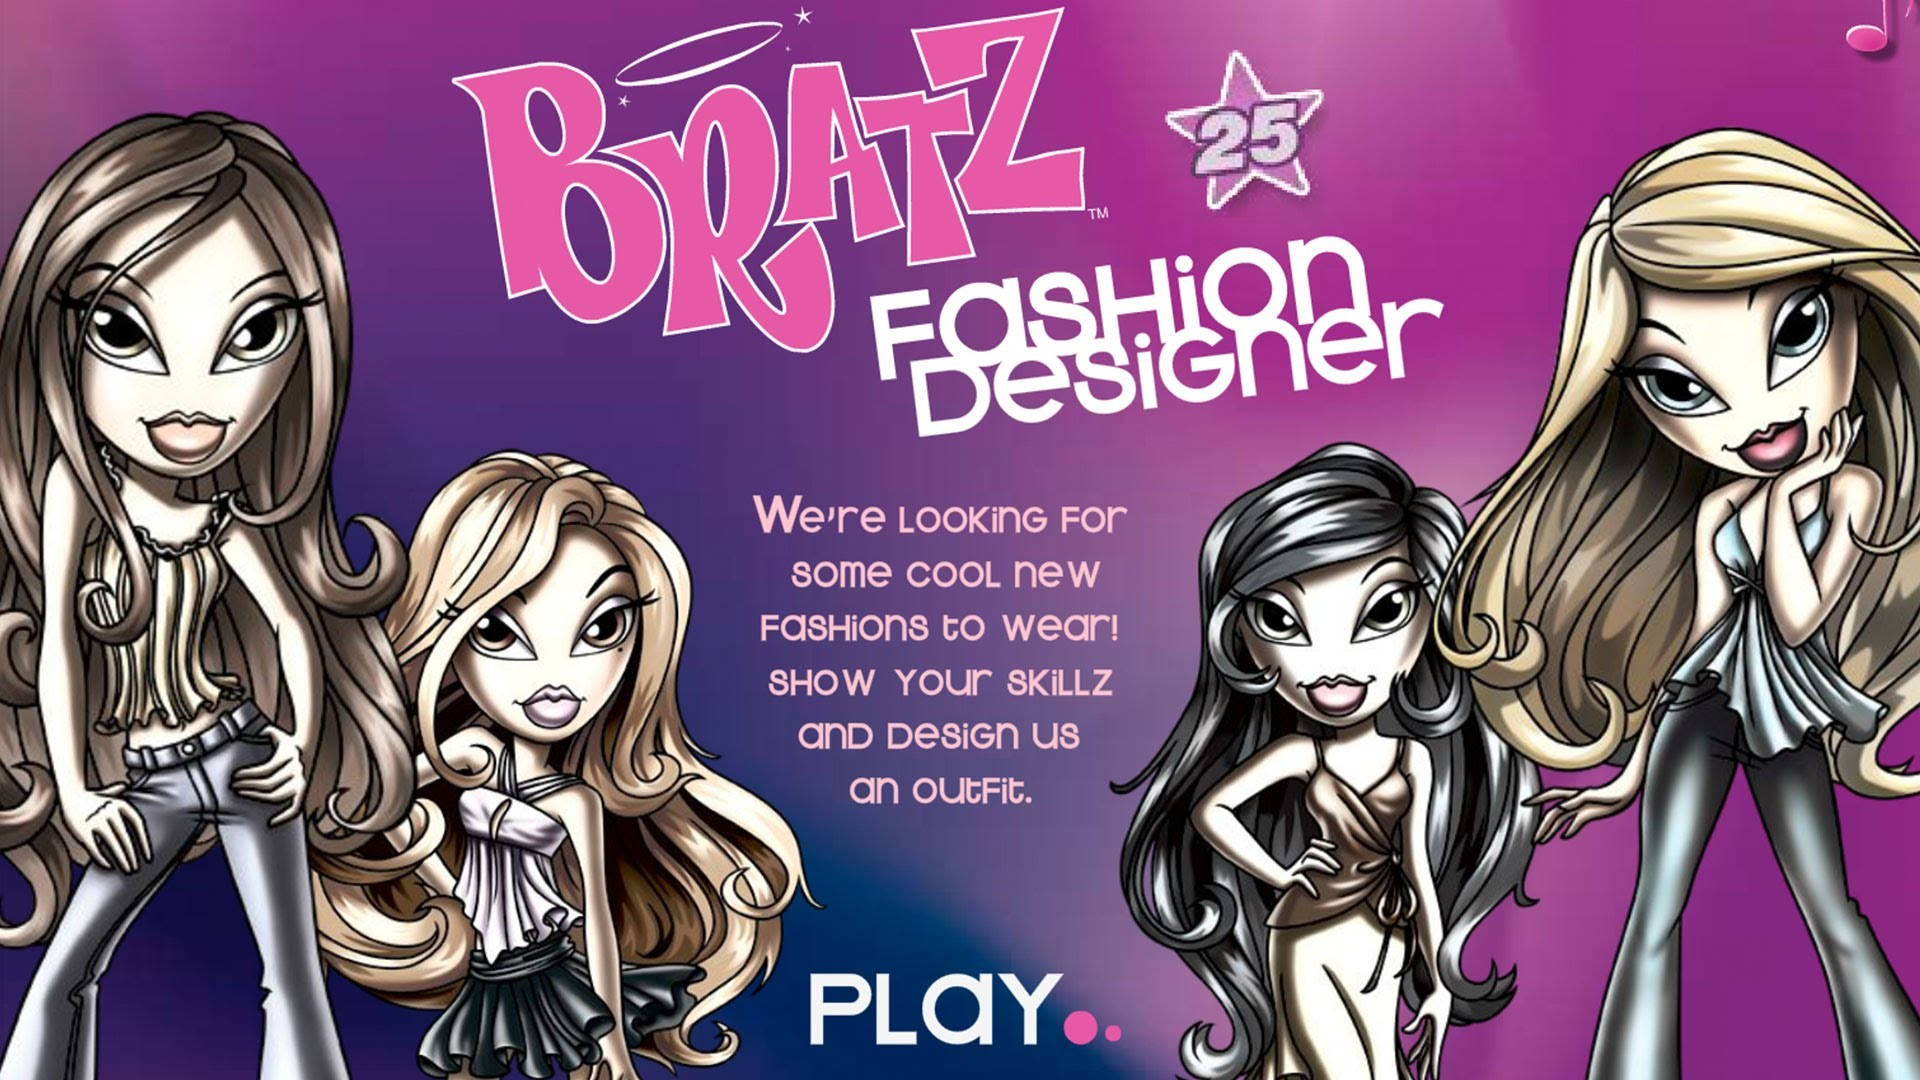 Bratz Aesthetic Fashion Game Poster Background